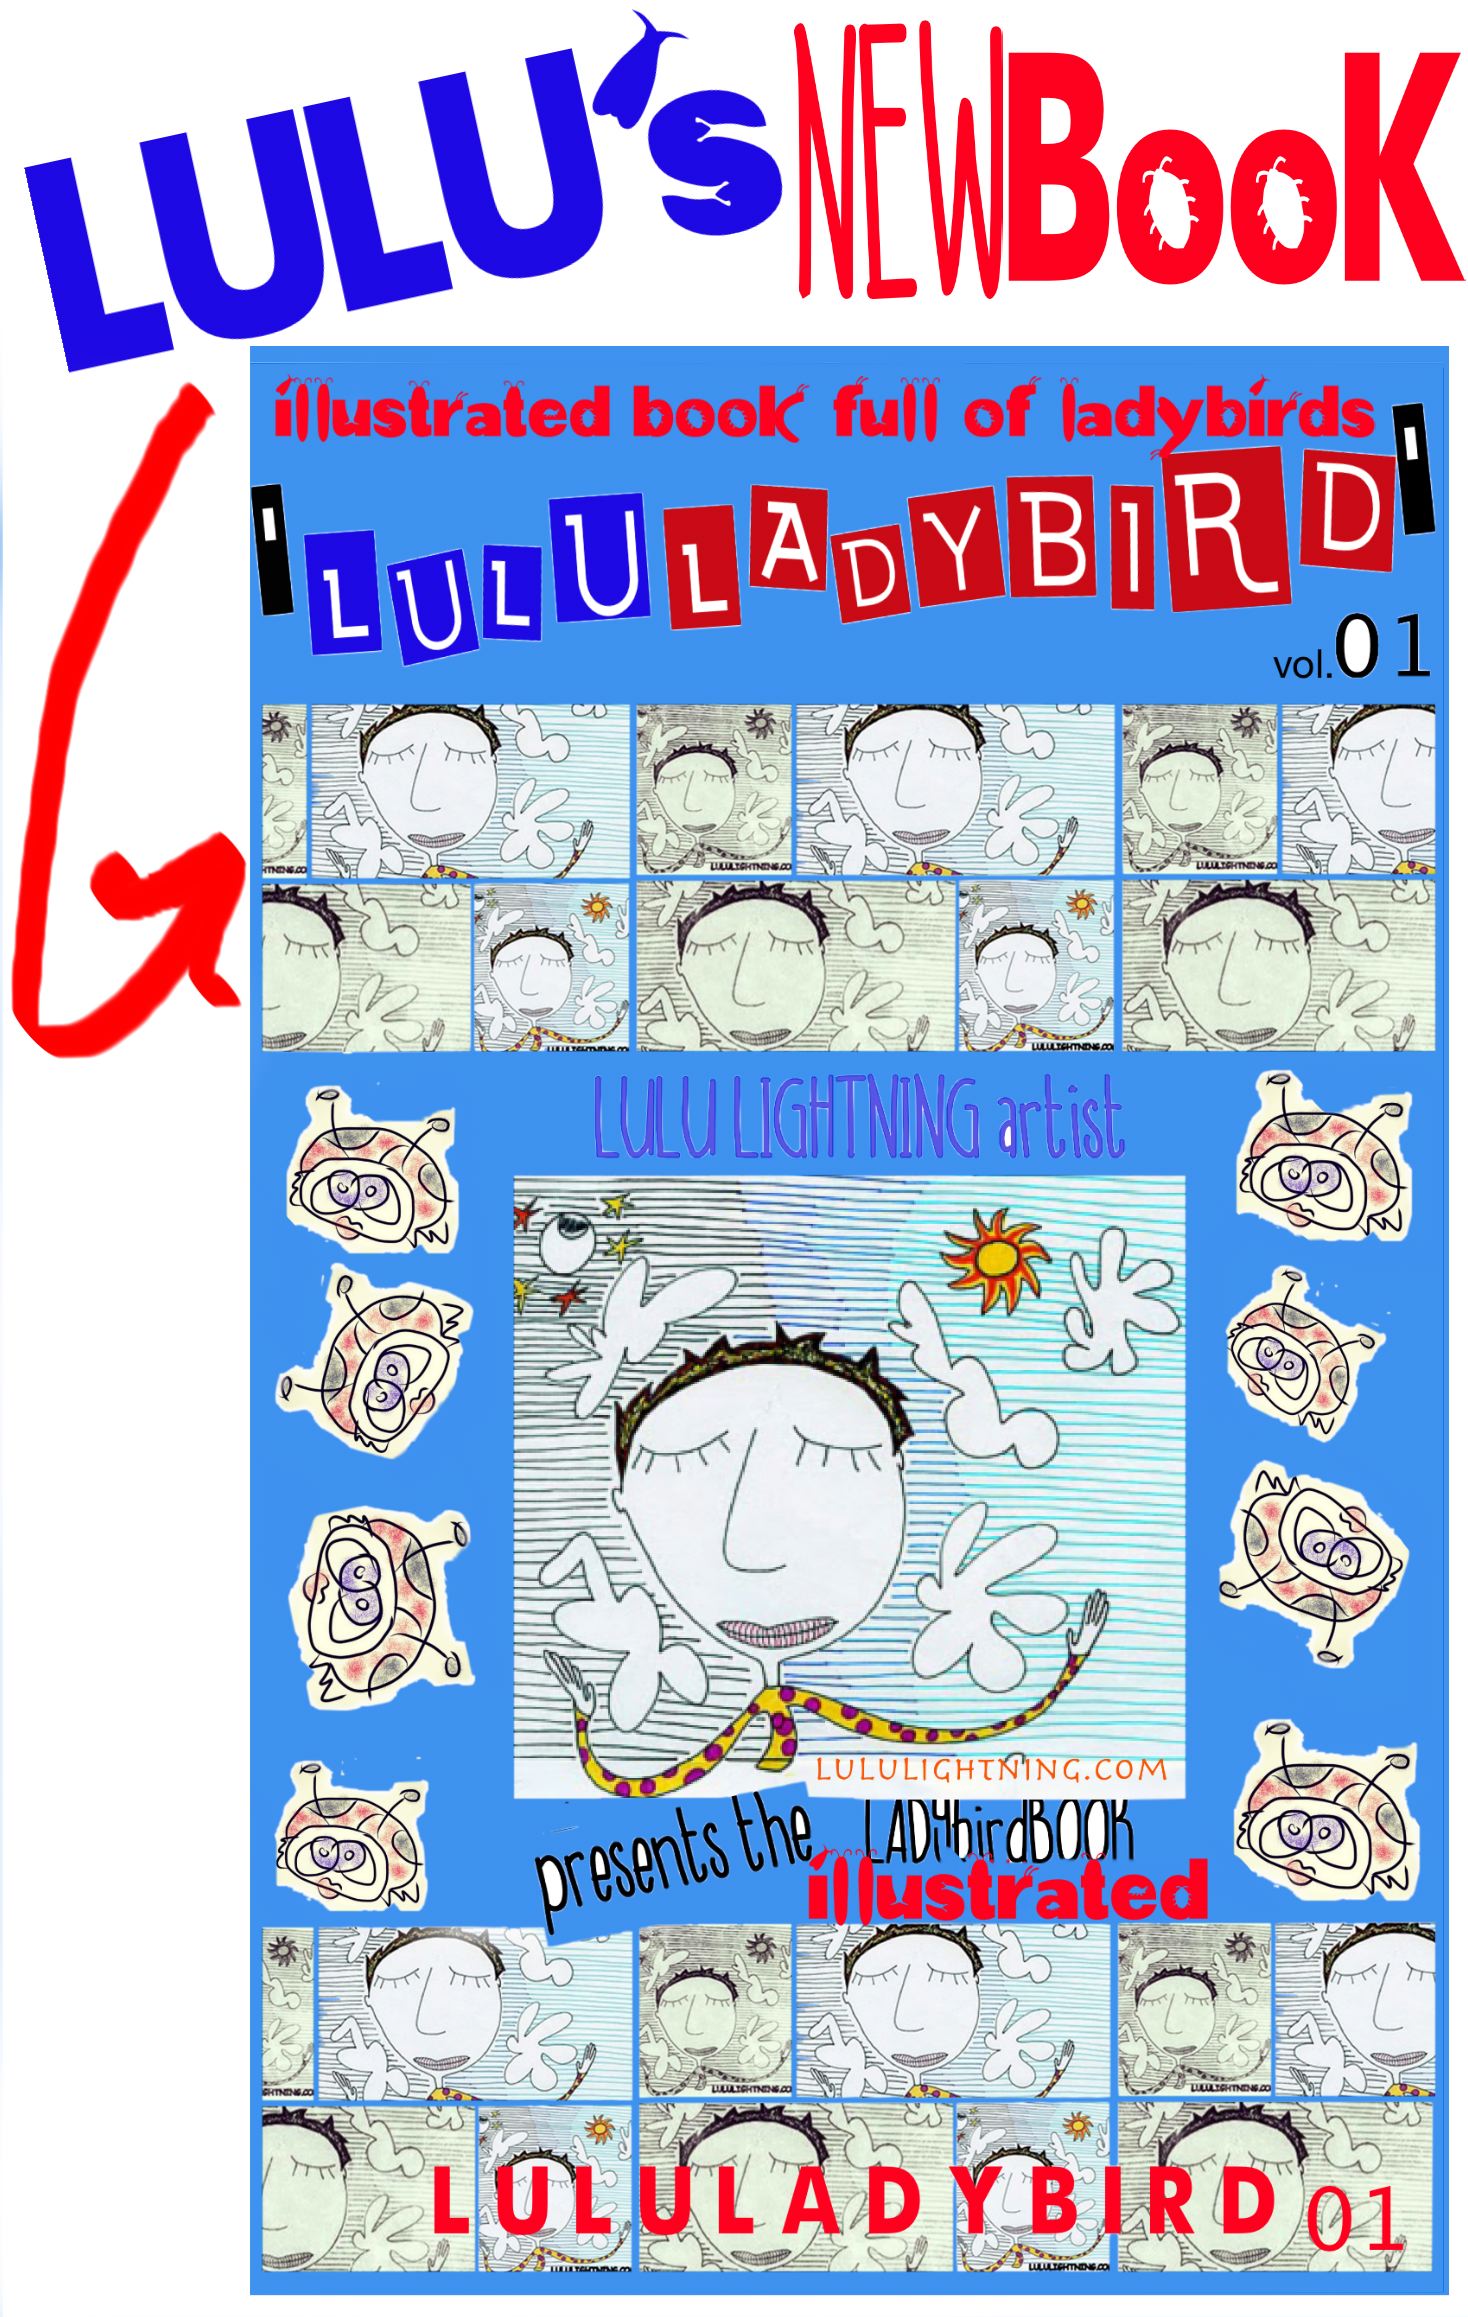 LULULADYBIRD 01 bookcover